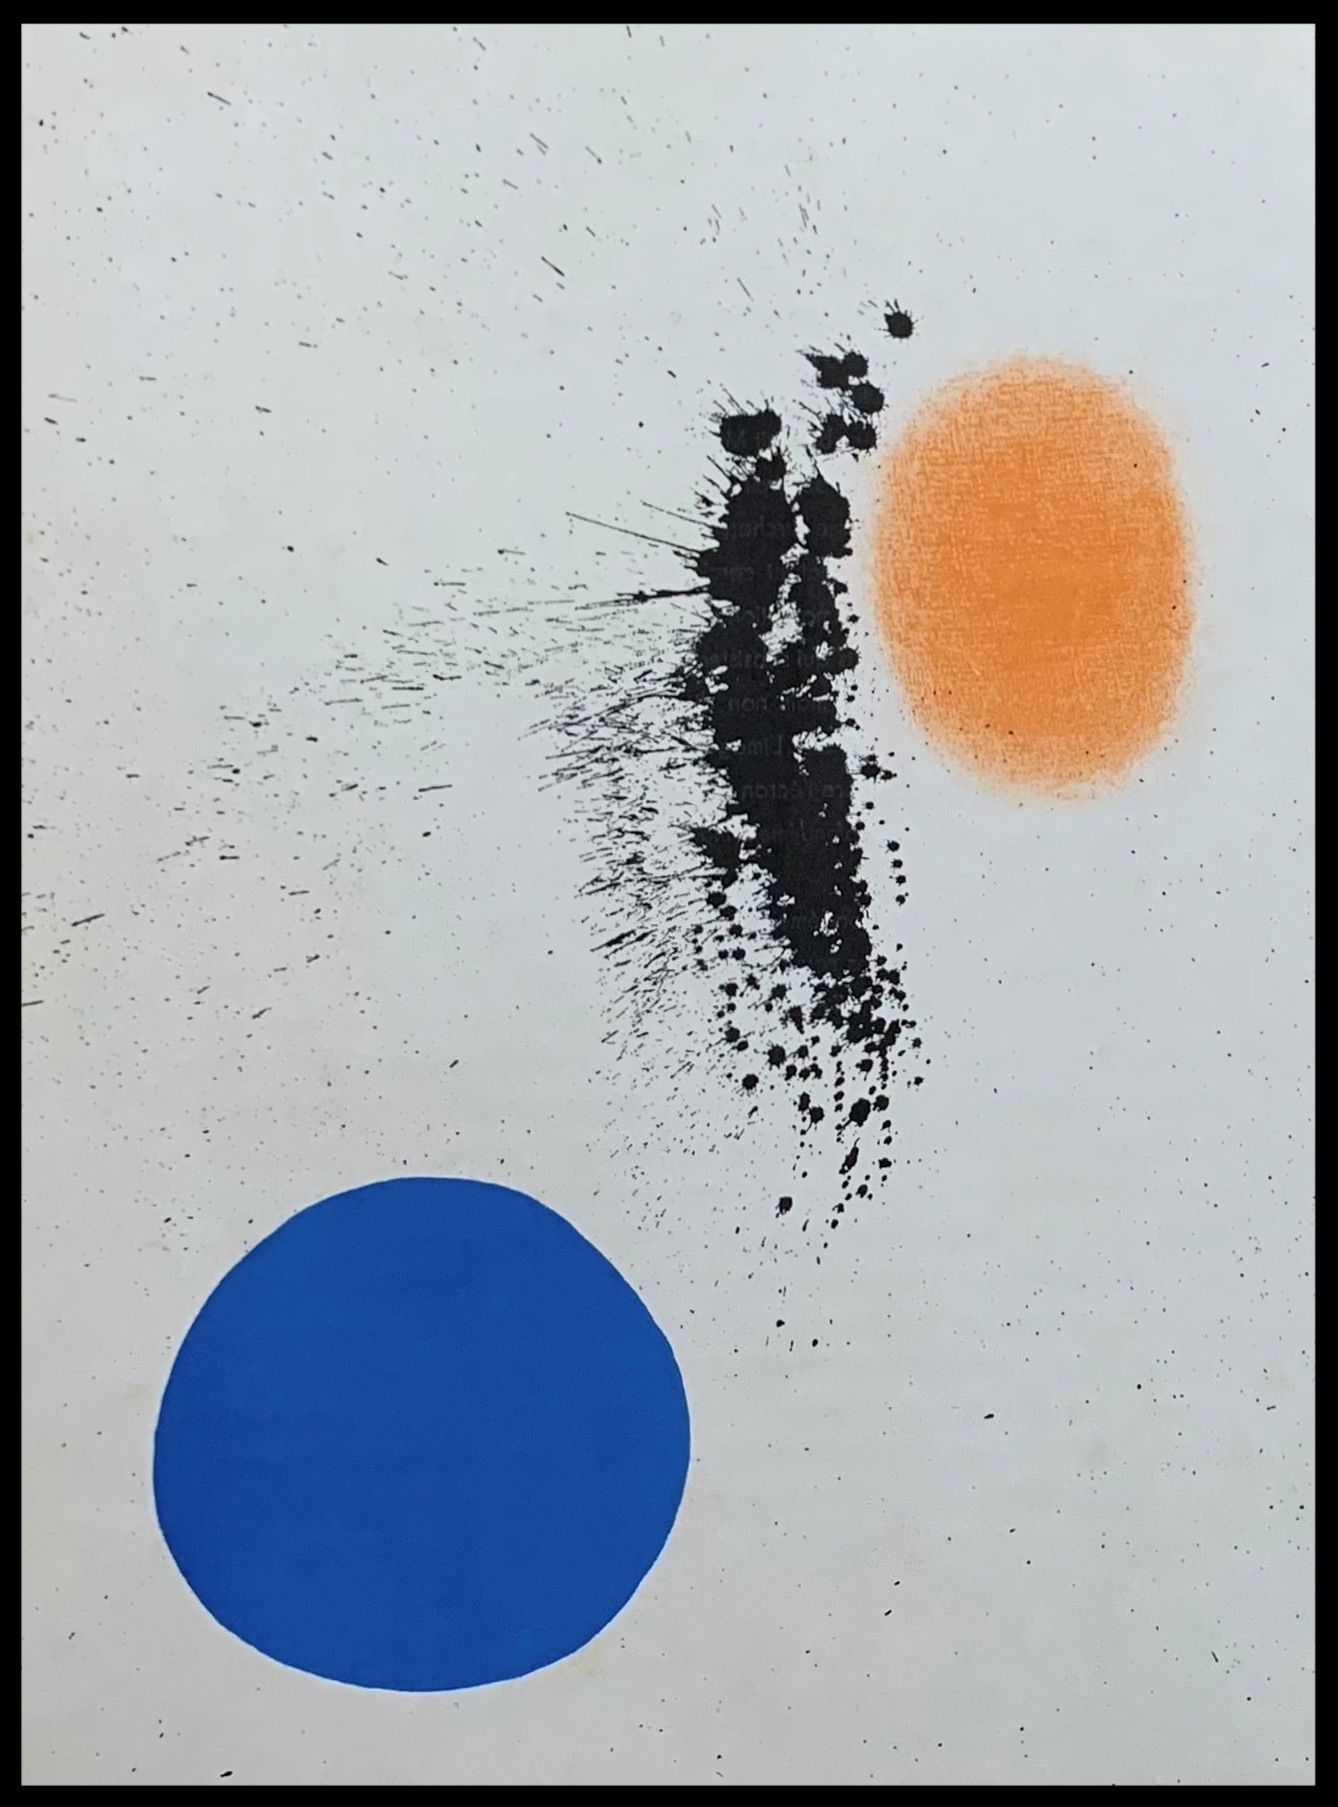 Joan Miro 琼-米罗 (1893 - 1983)

创作I, 1961

石版画

打印：未知

无符号工作

背面的文字是经过编辑的

由巴黎穆尔洛工&hellip;